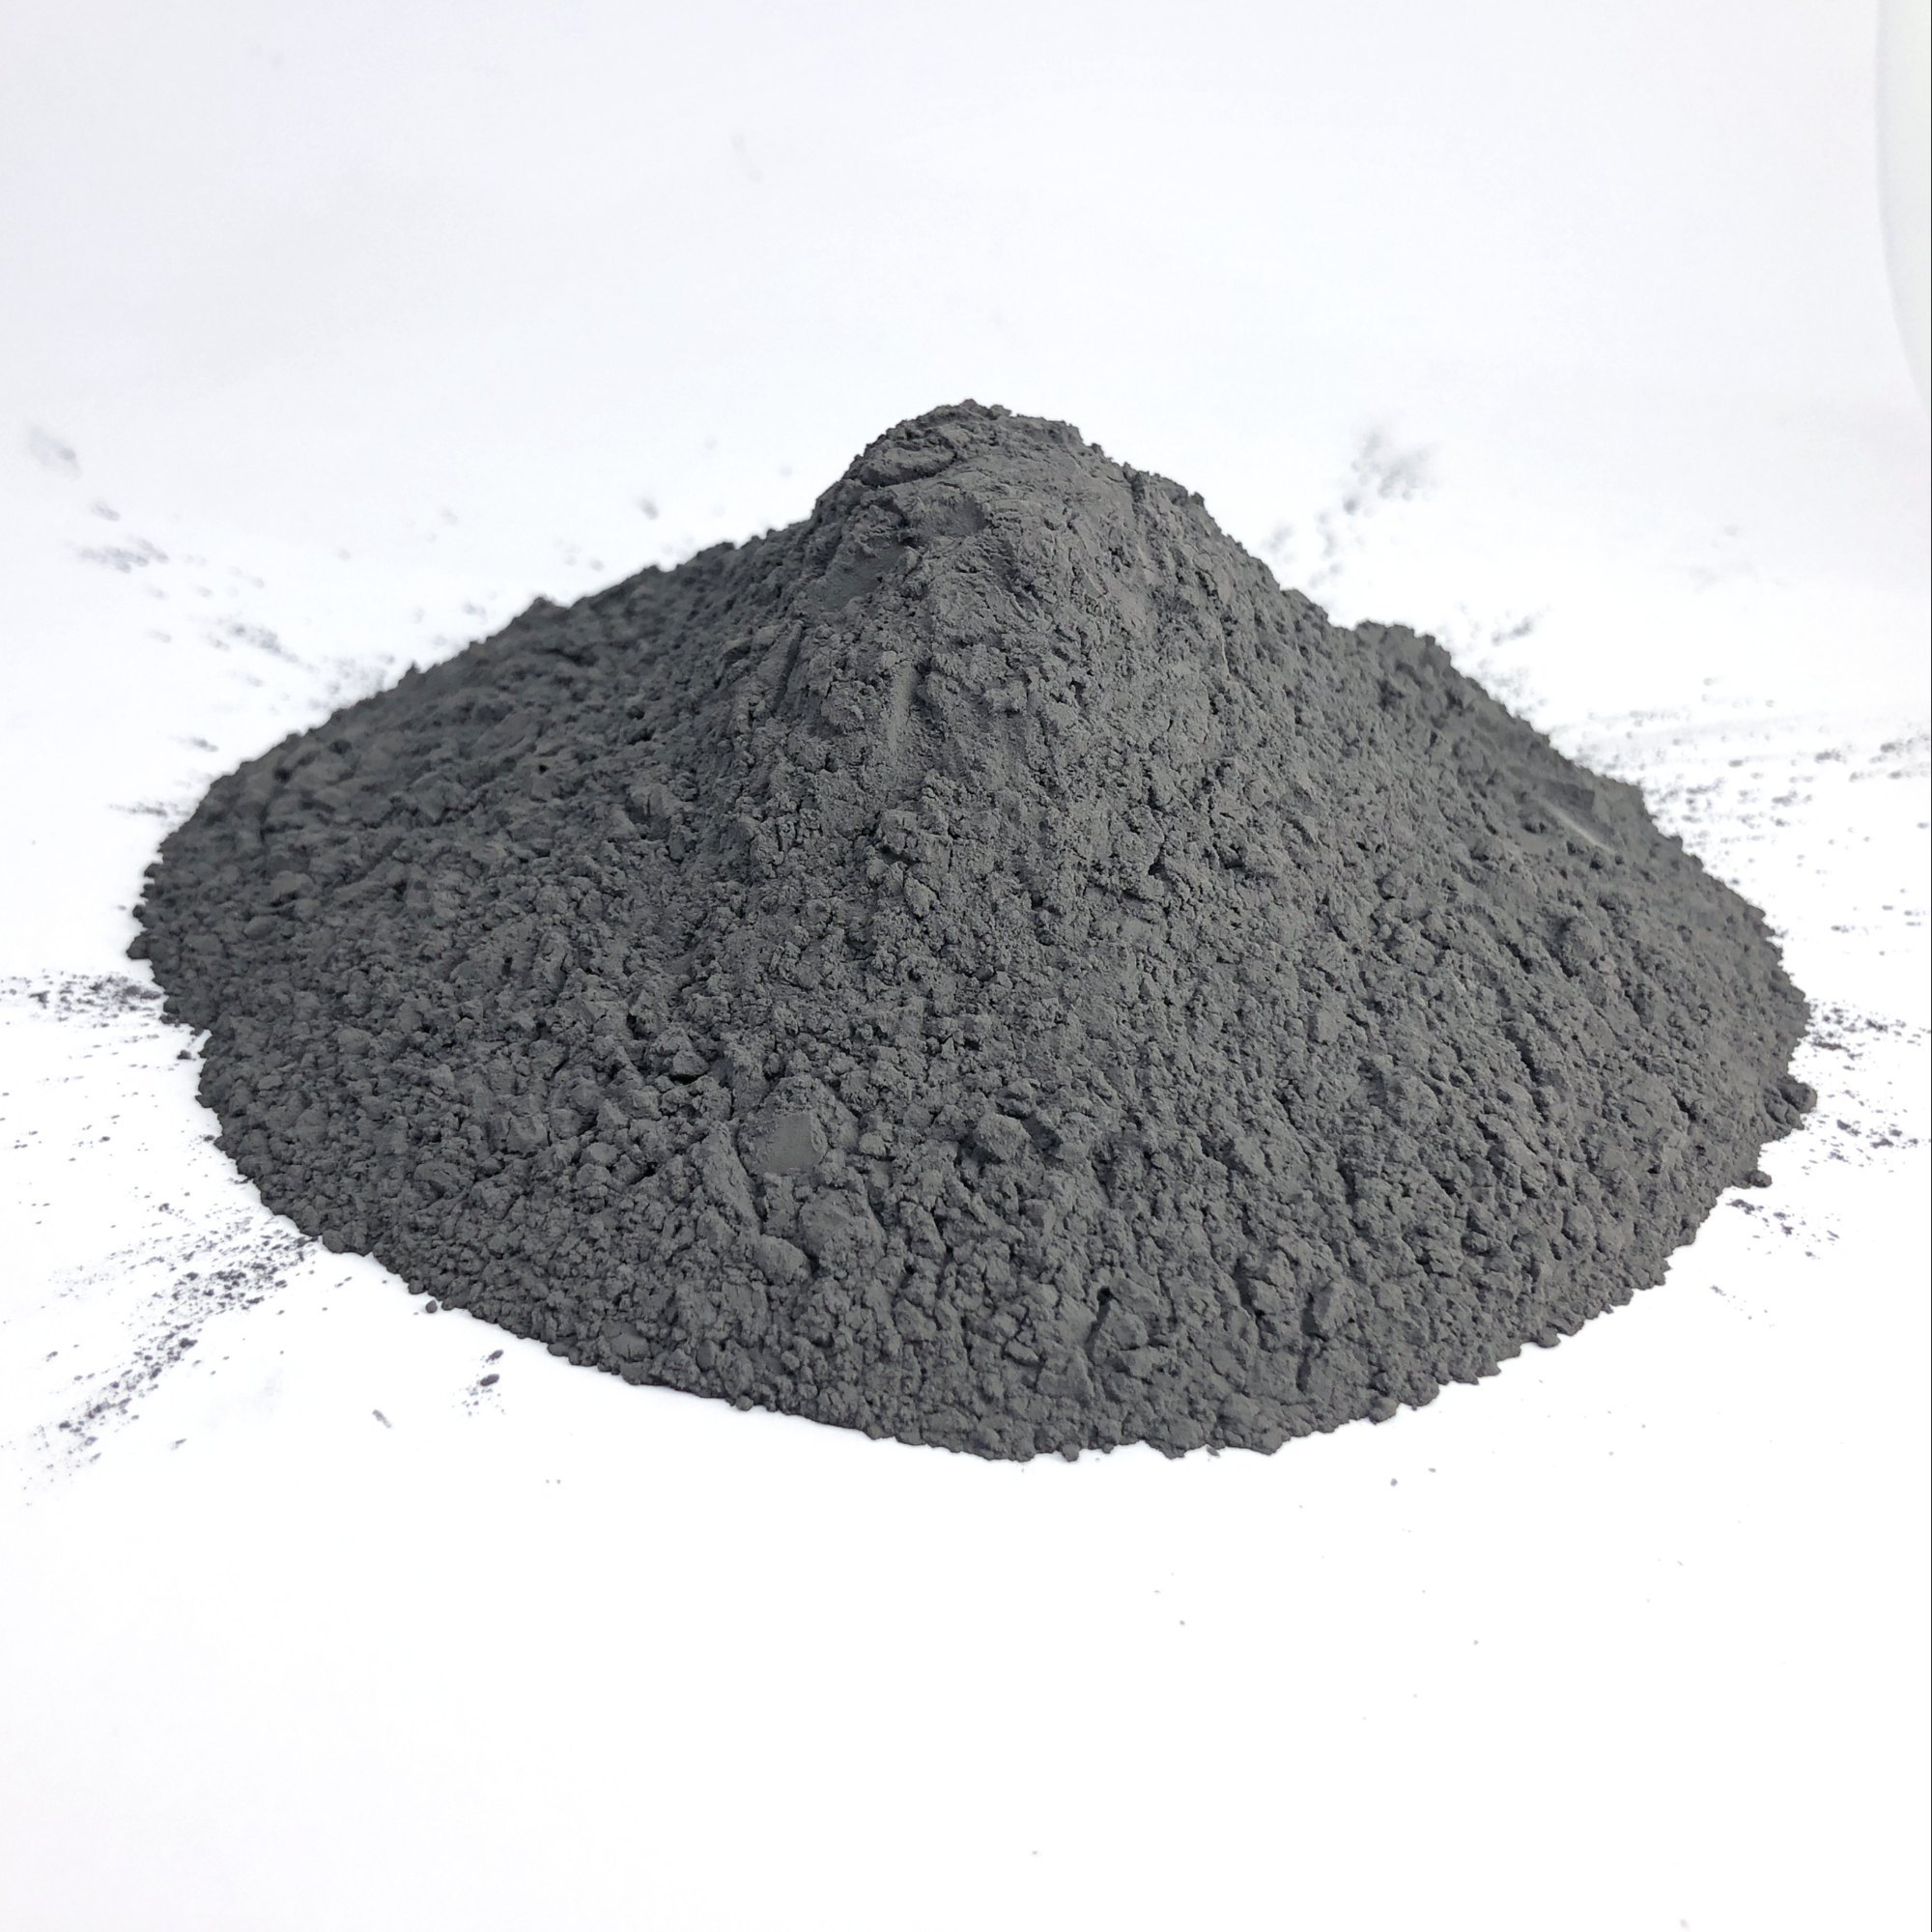 Zinc Dust Manufacturer: the Production and Characteristics